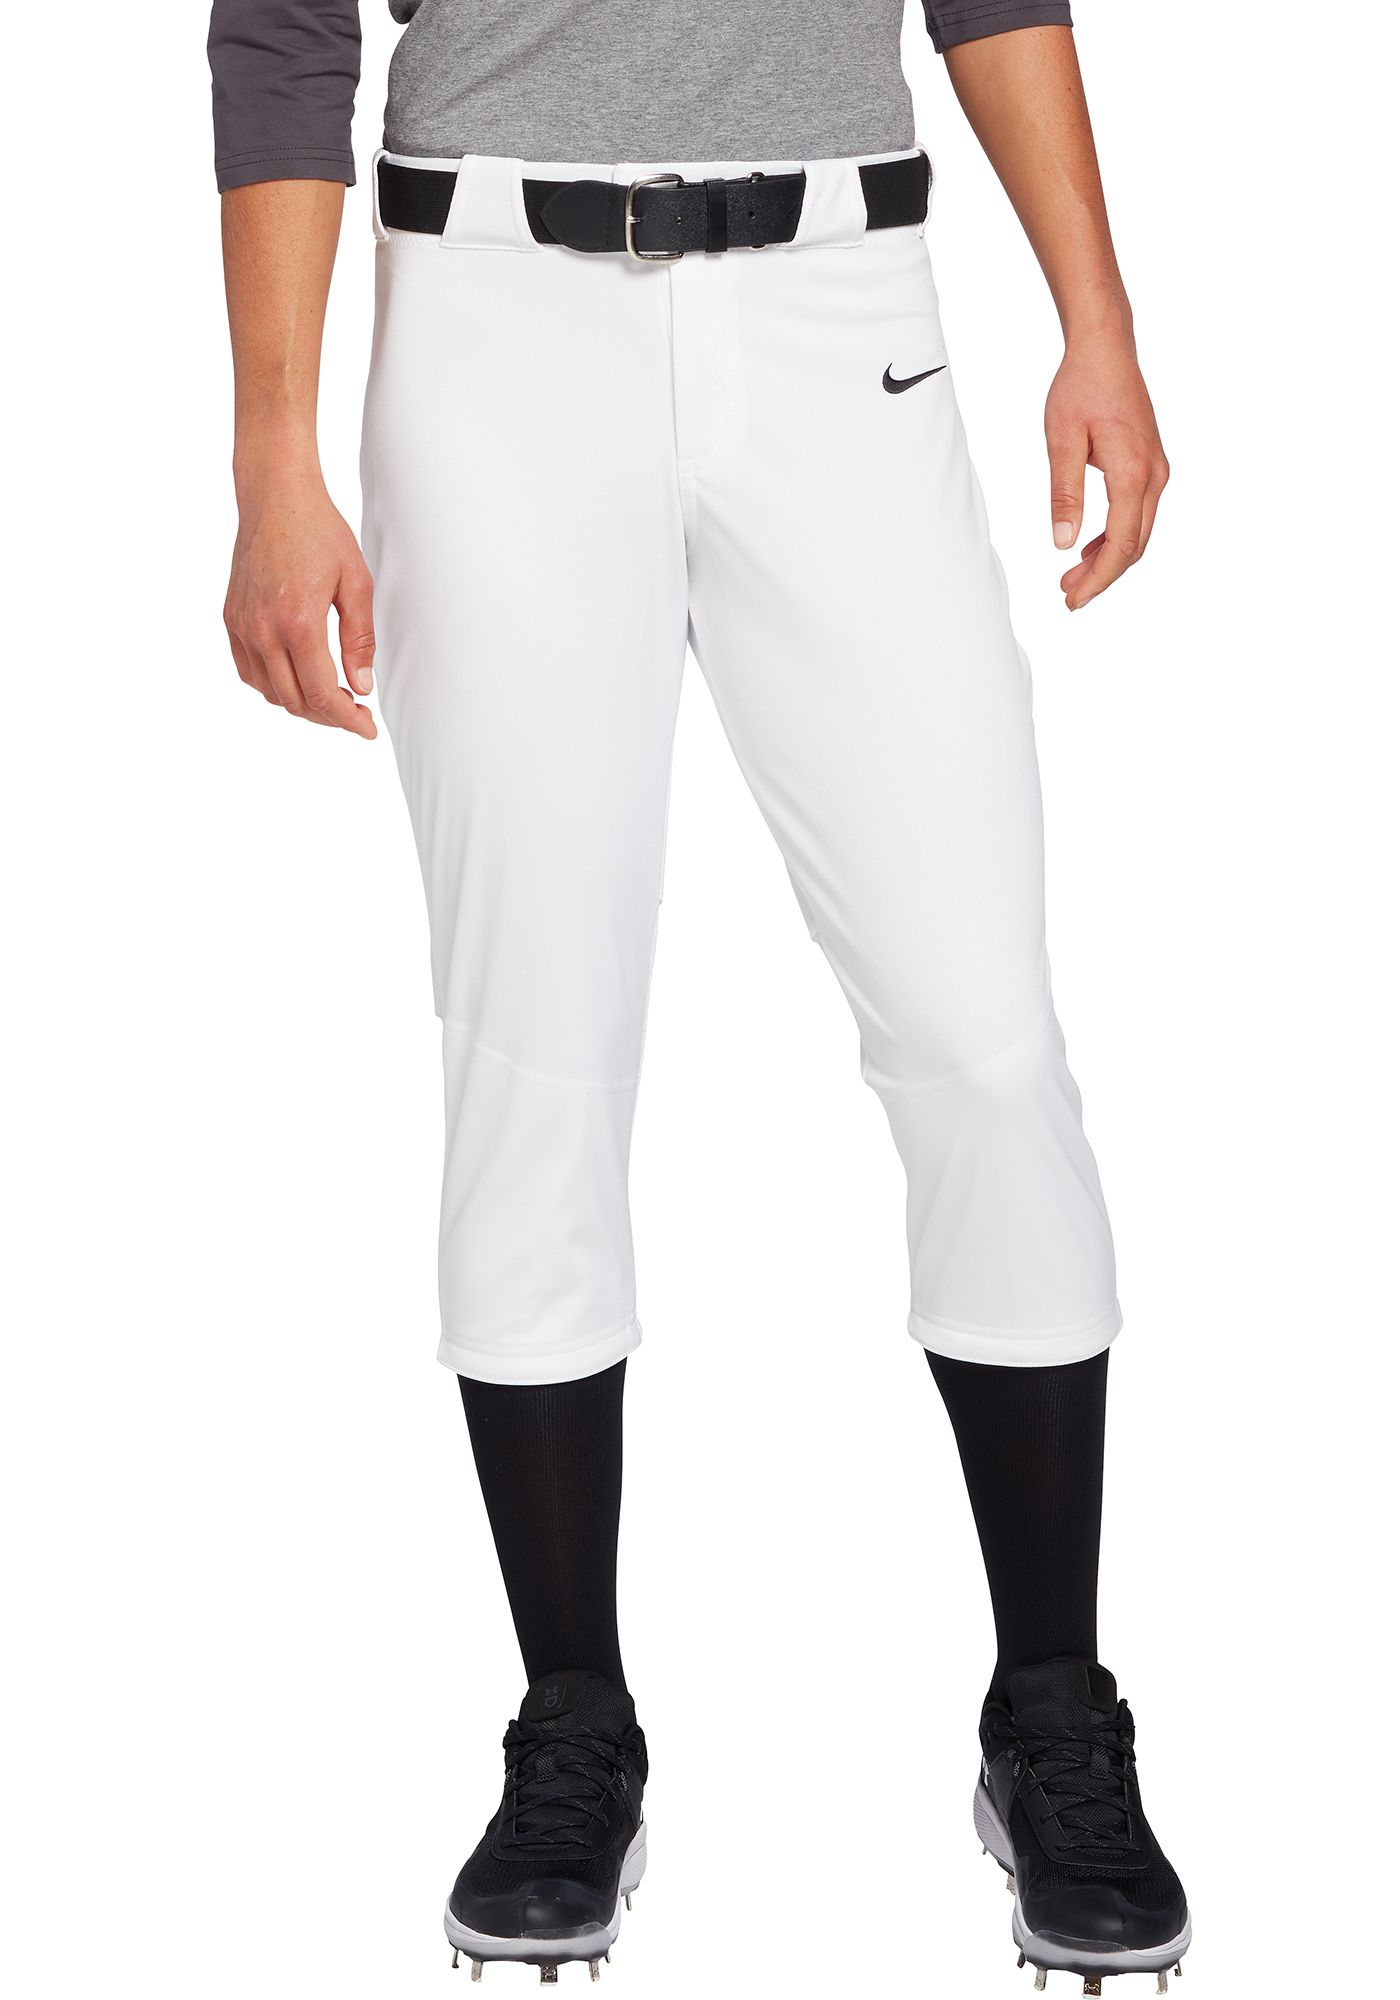 Nike Women's Vapor Select Softball Pants DICK'S Sporting Goods